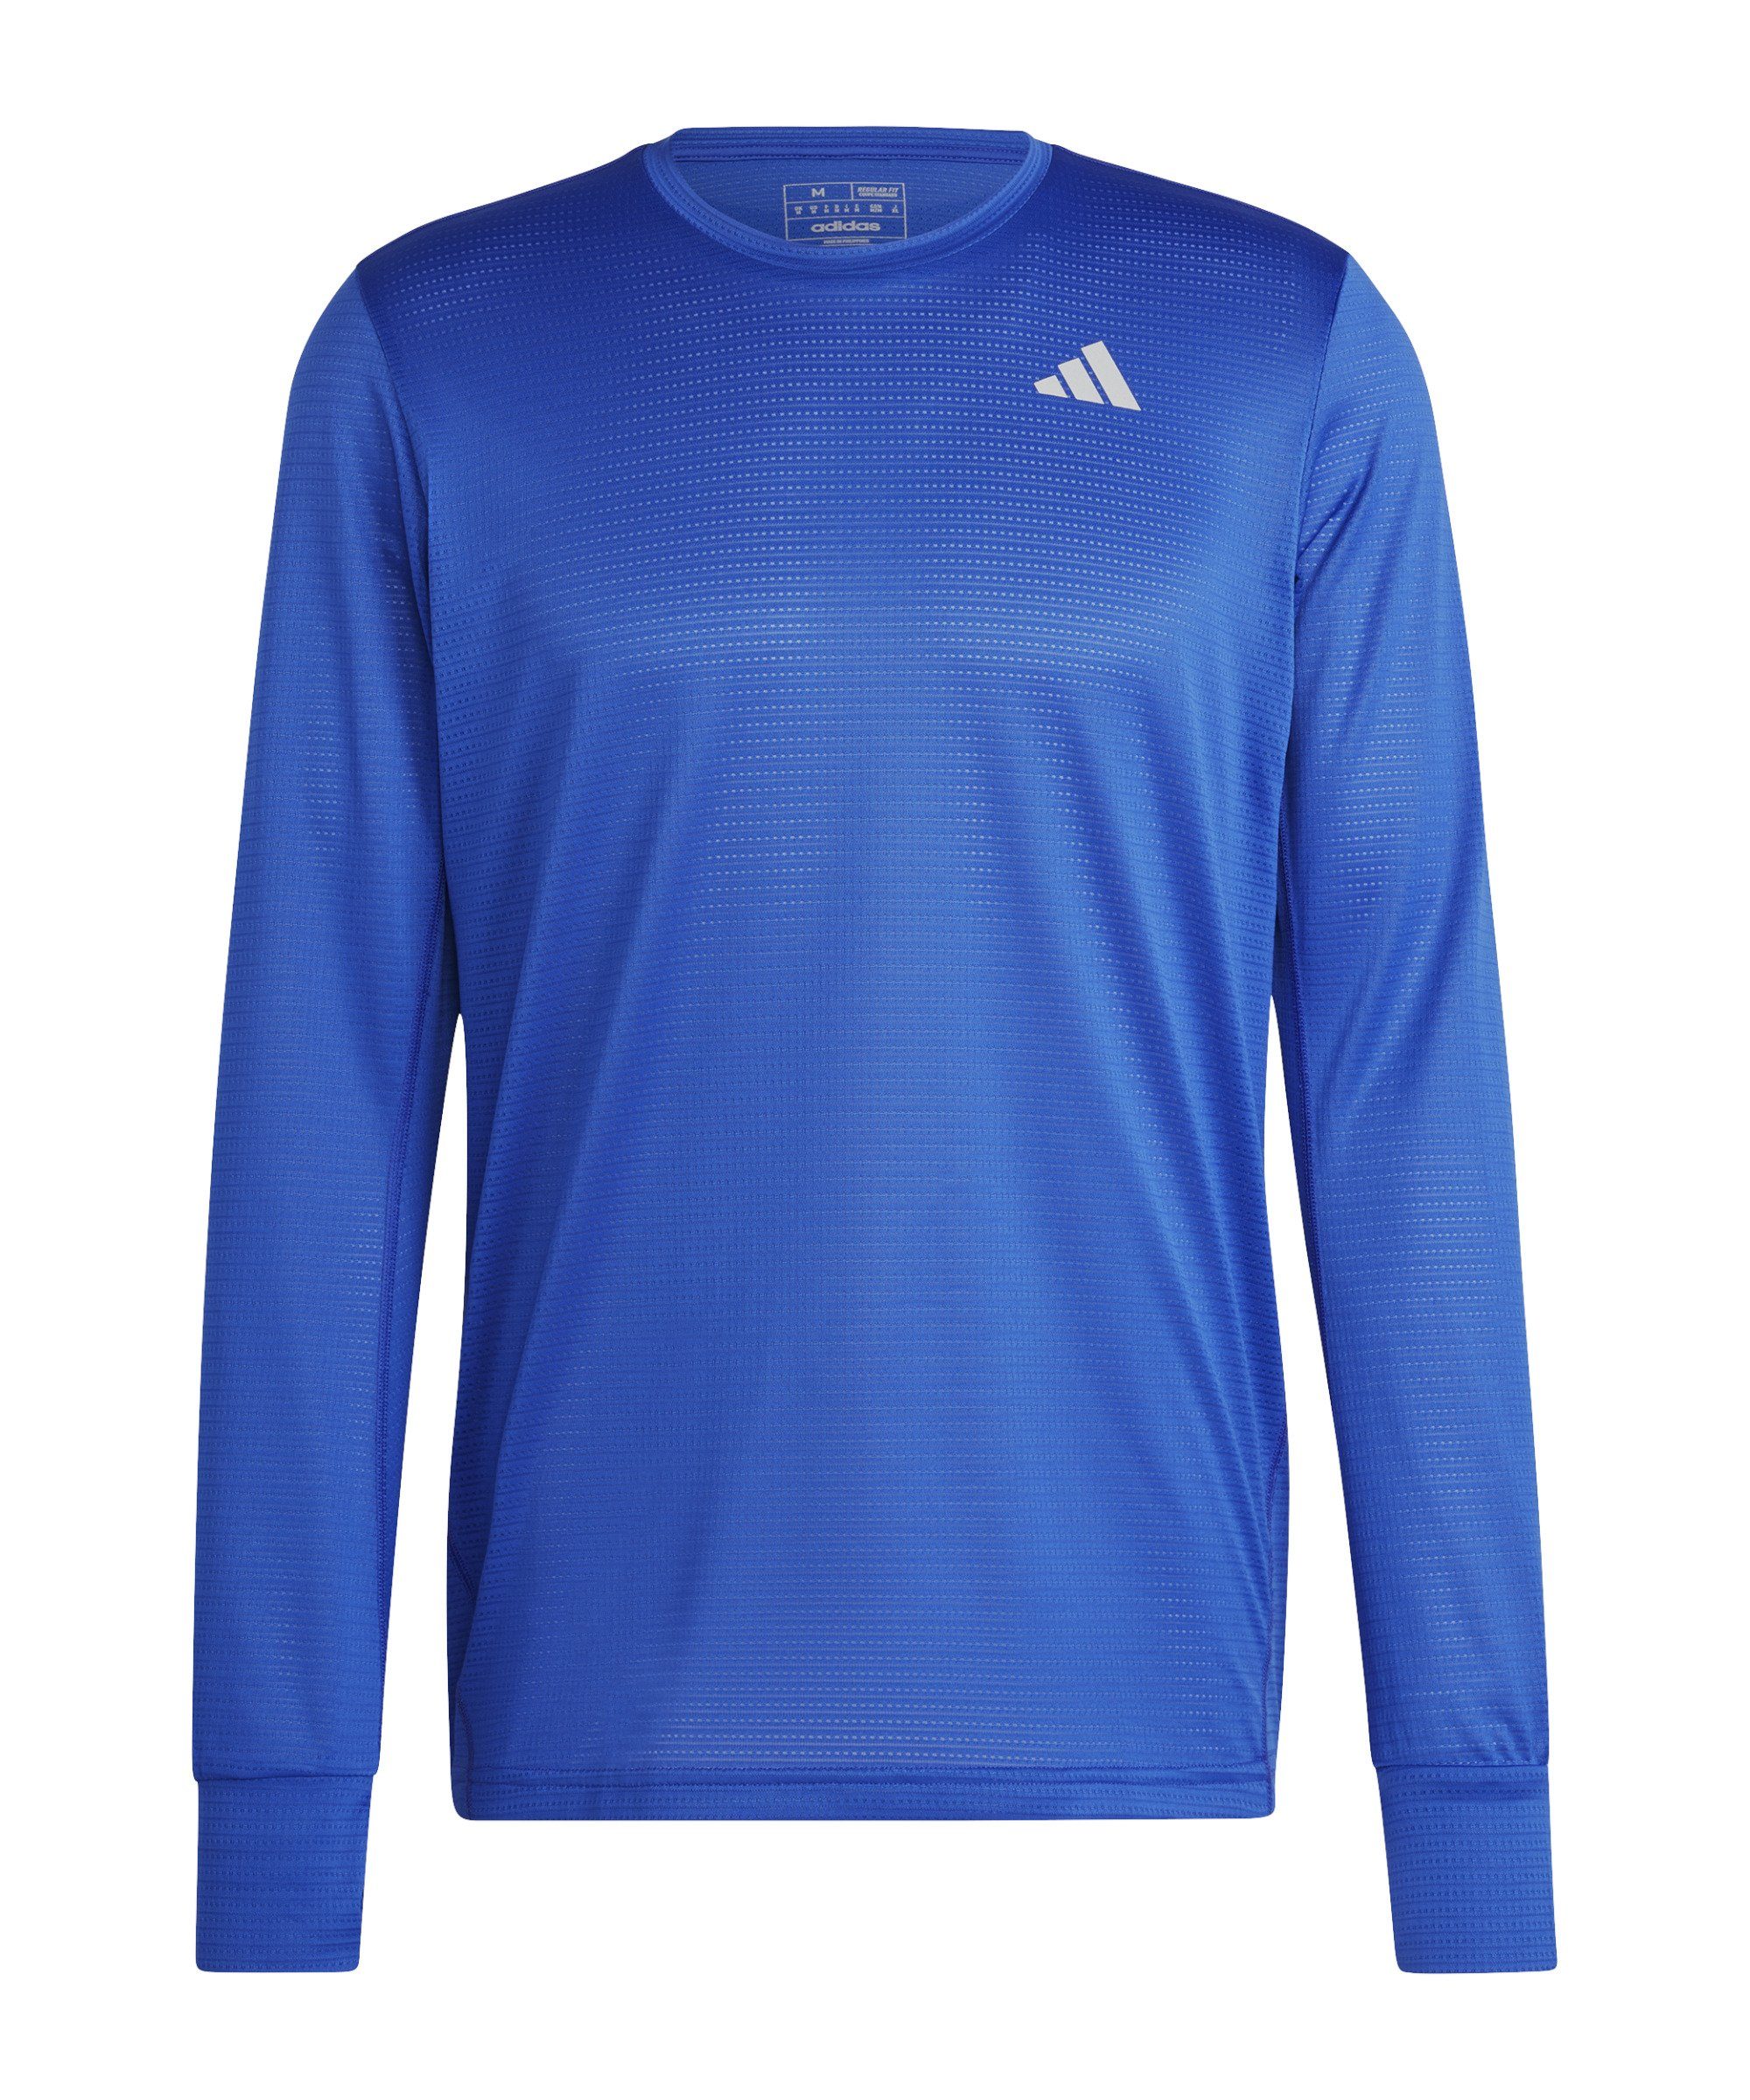 adidas Performance blau Lauftop Sweatshirt Own Run the default